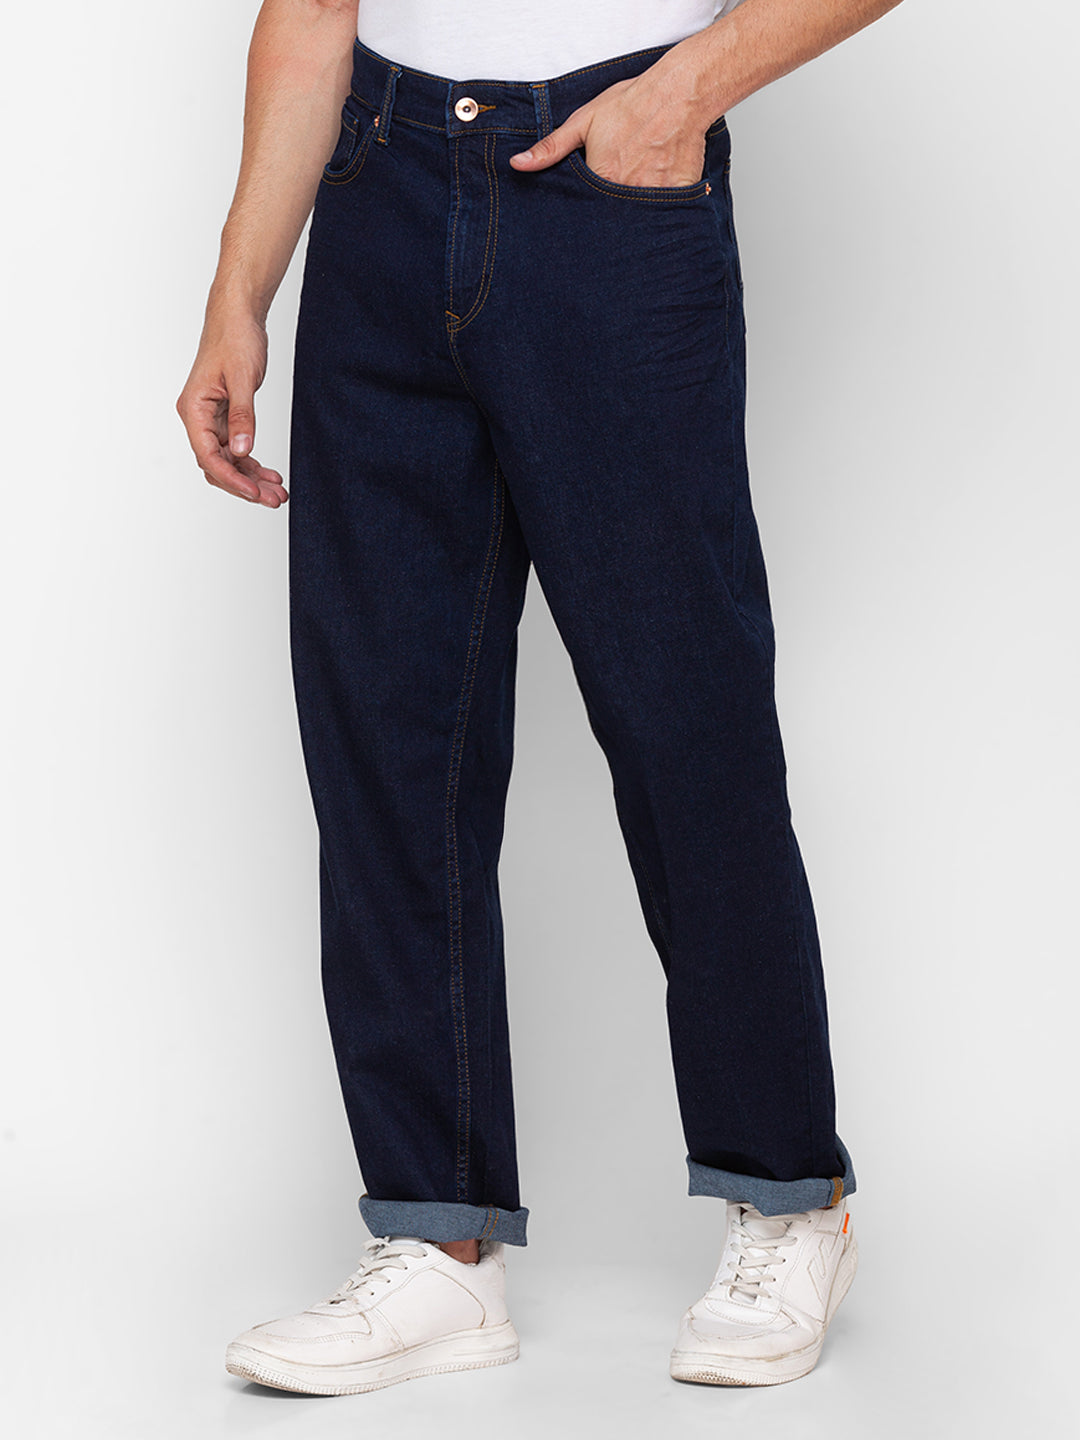 Spykar Raw Blue Cotton Loose Fit Regular Length Jeans For Men (Renato)